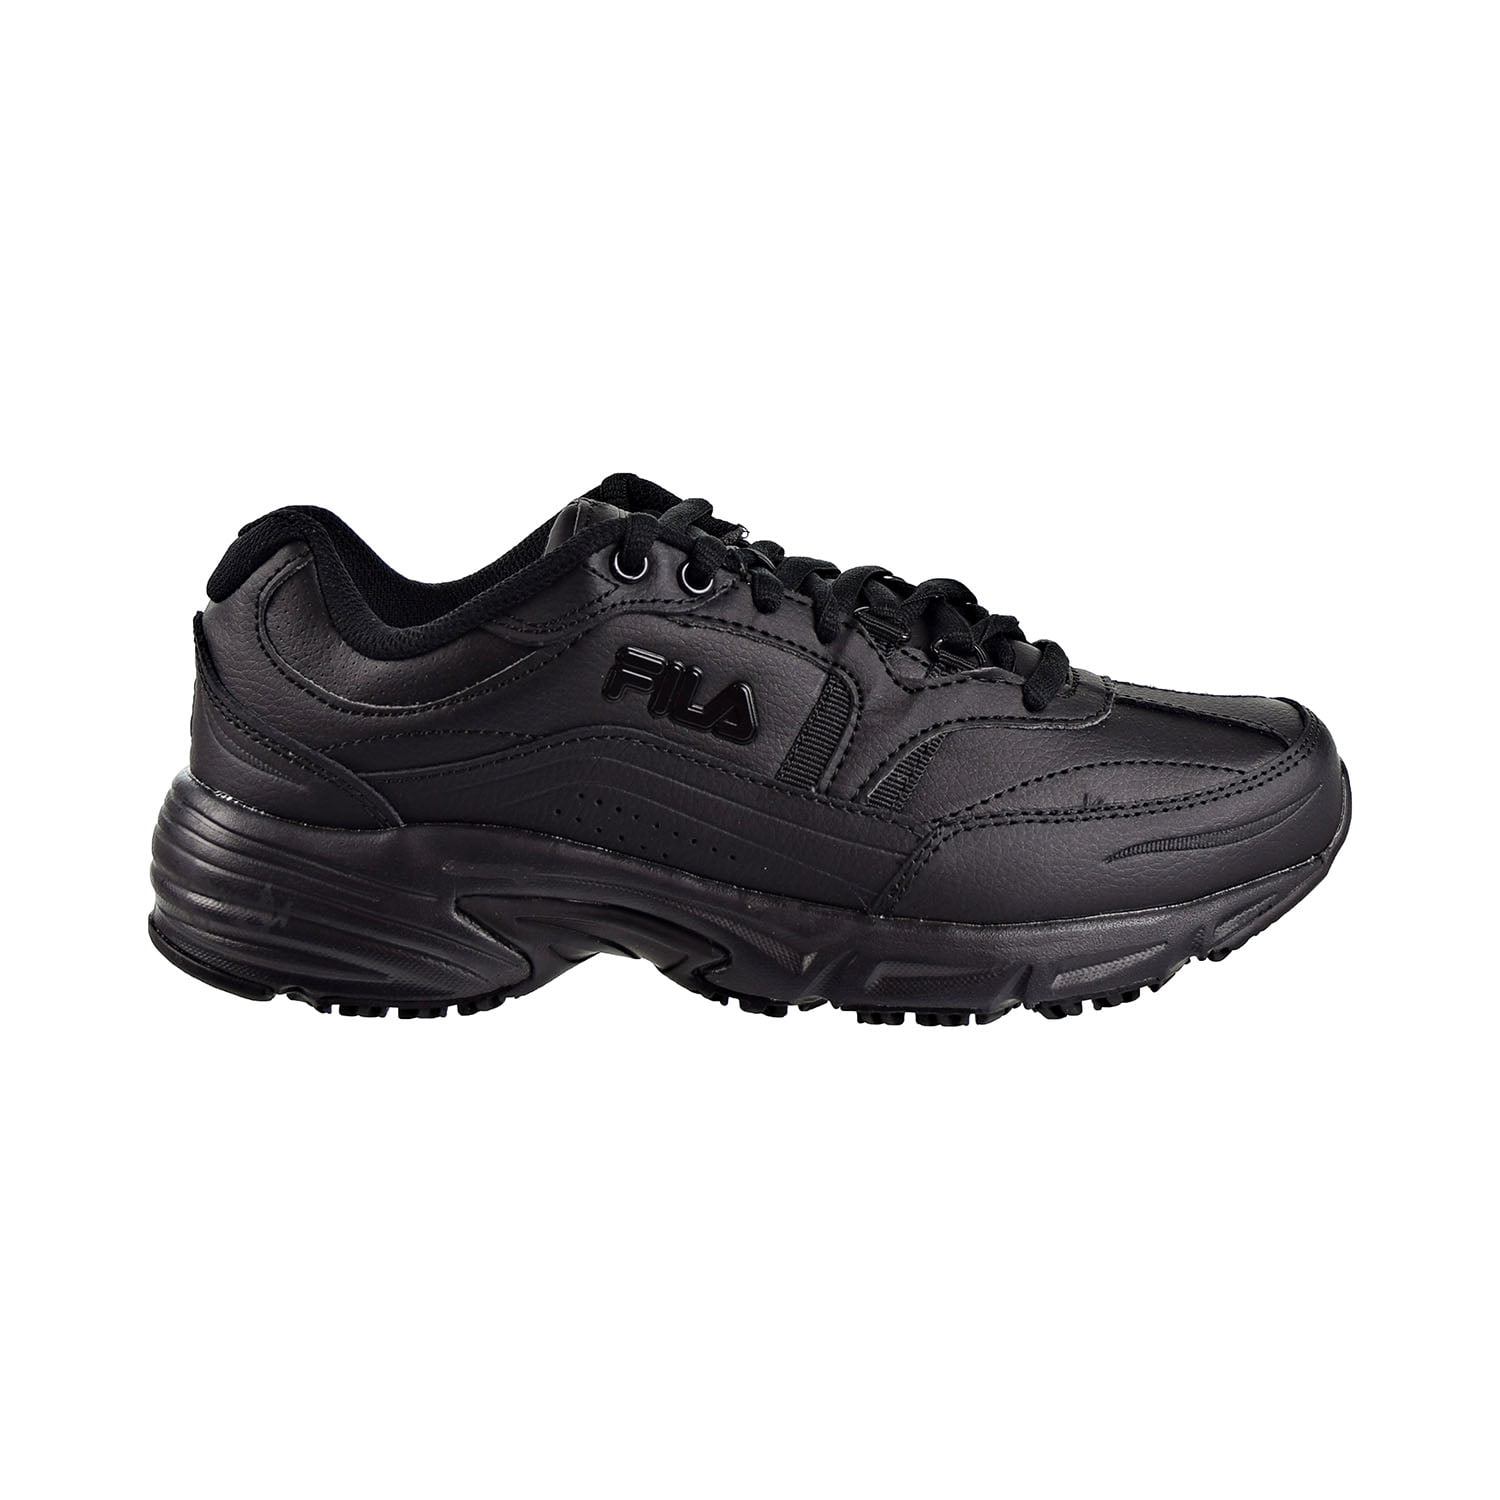 Size 12 BTGBTS12 Brand New! Athletic Designed Industrial Work Shoe 